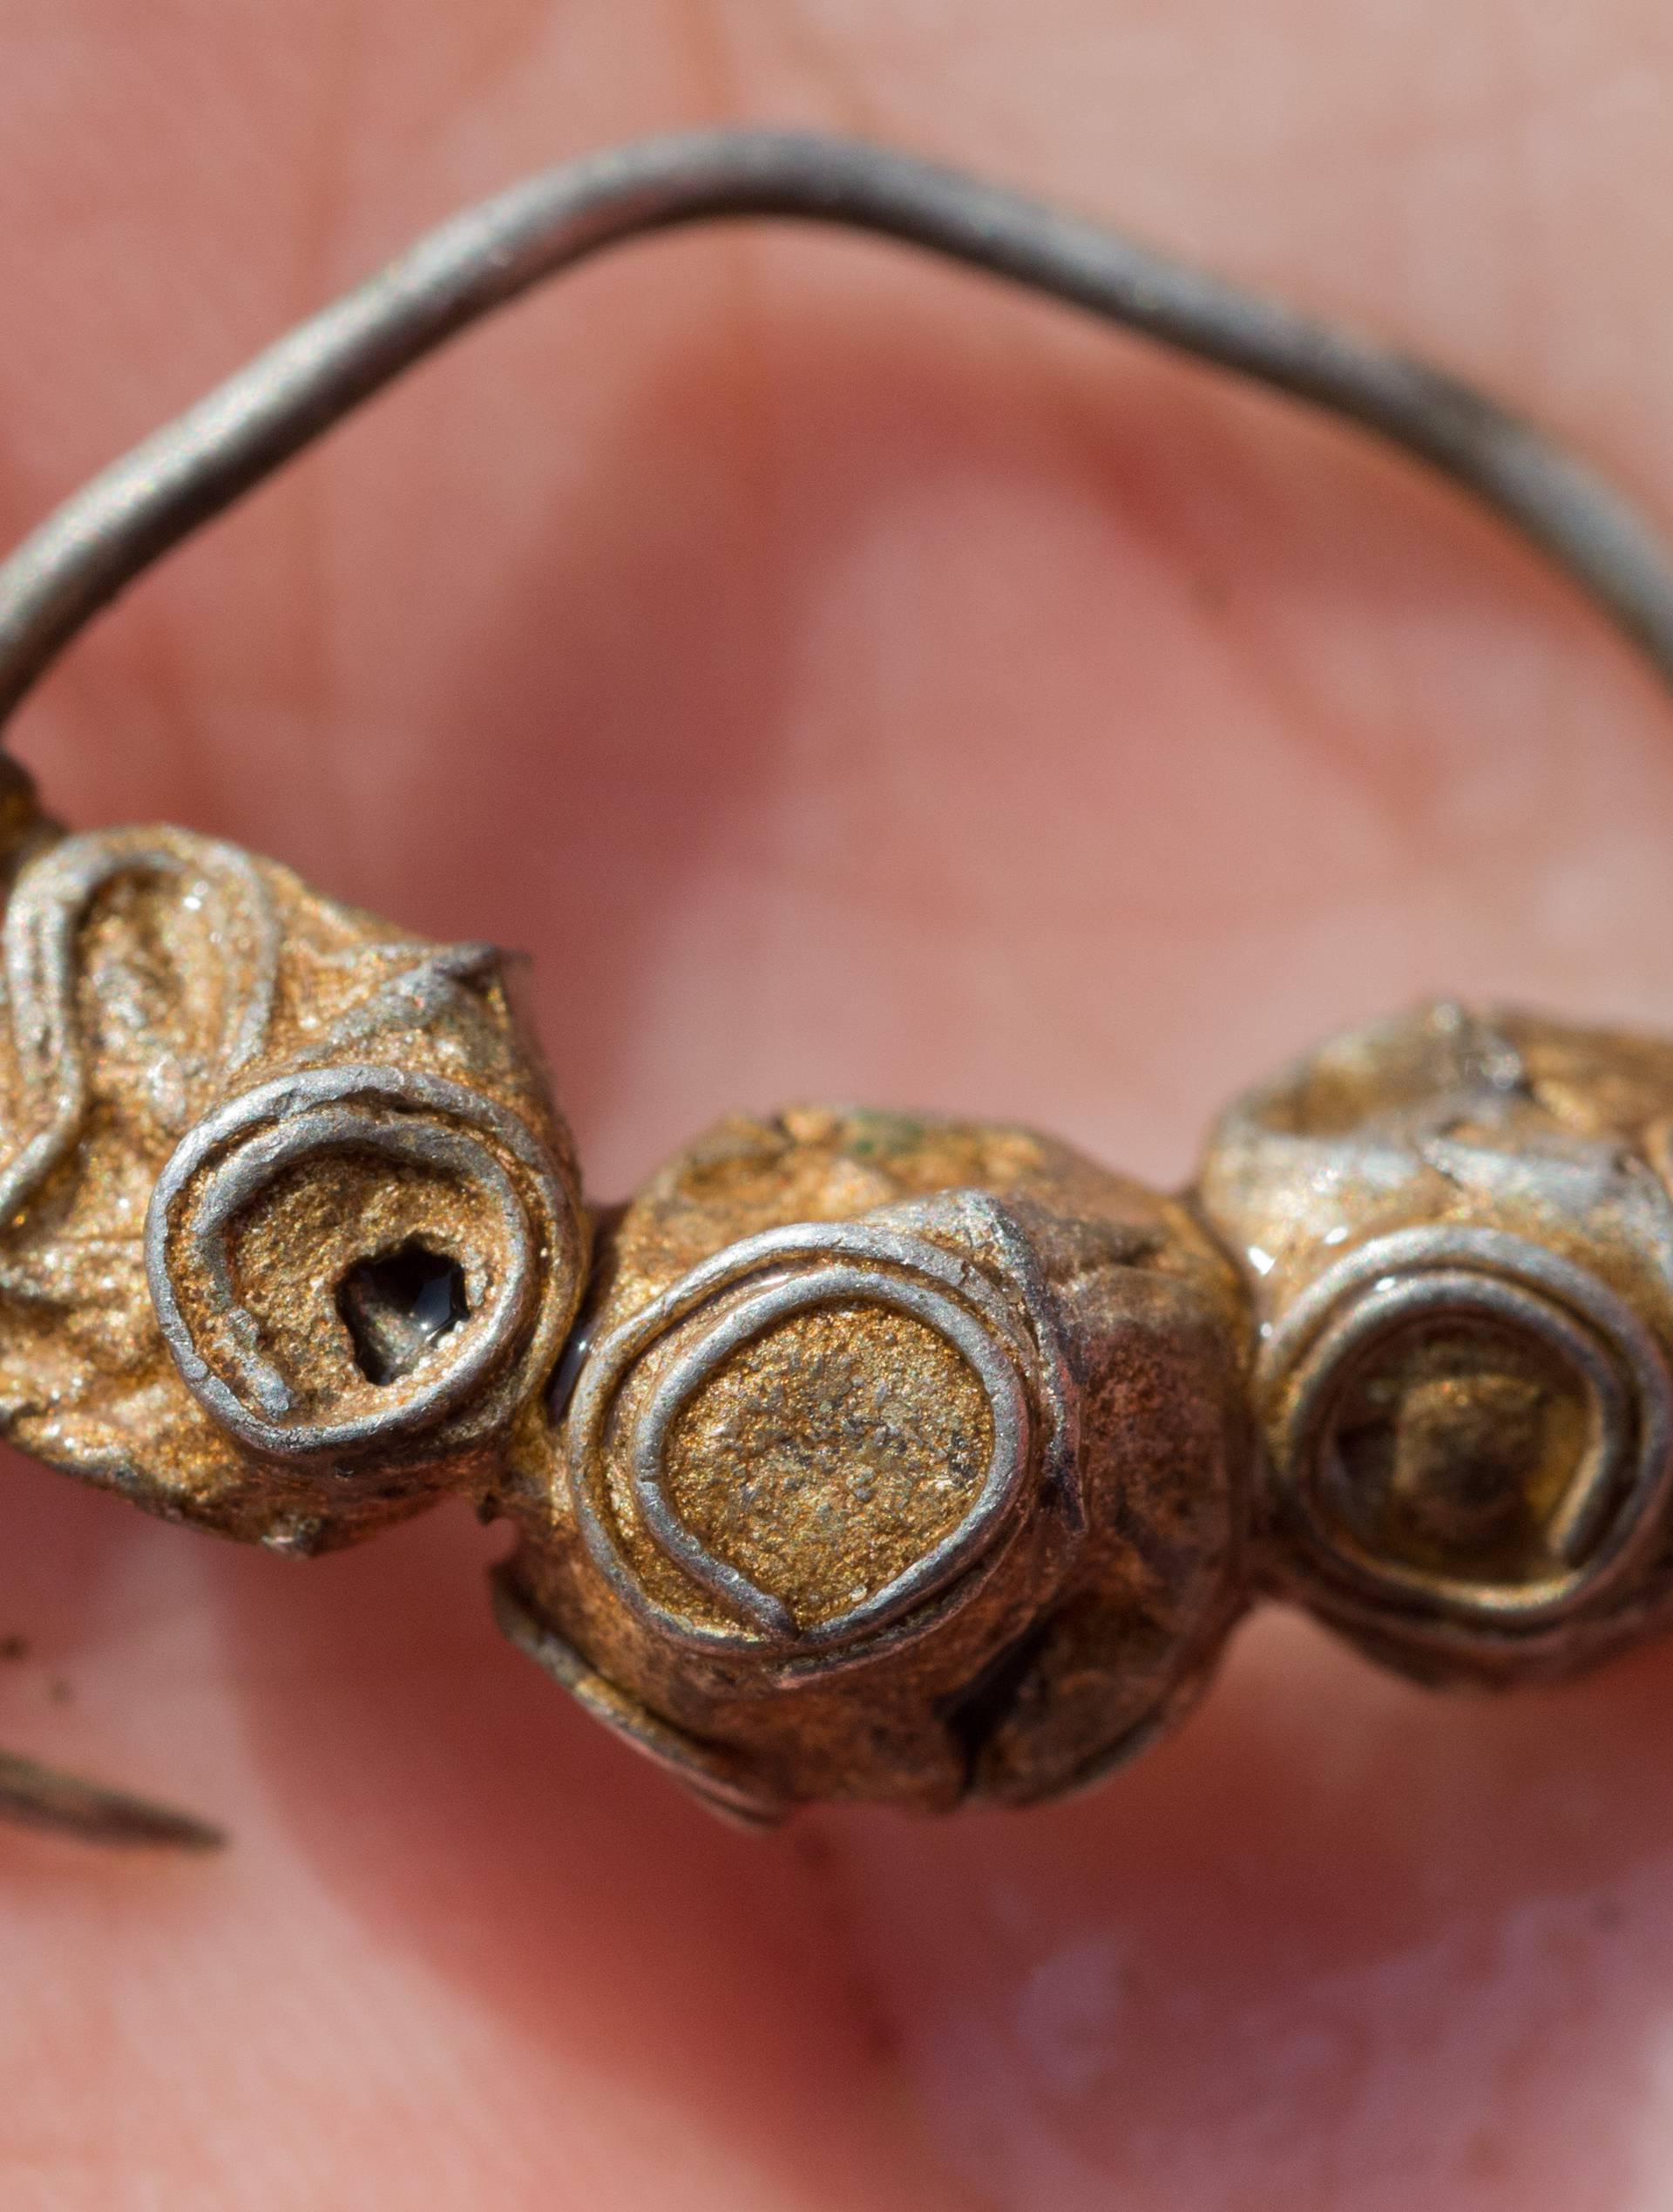 Silver treasures discovered on island of Ruegen